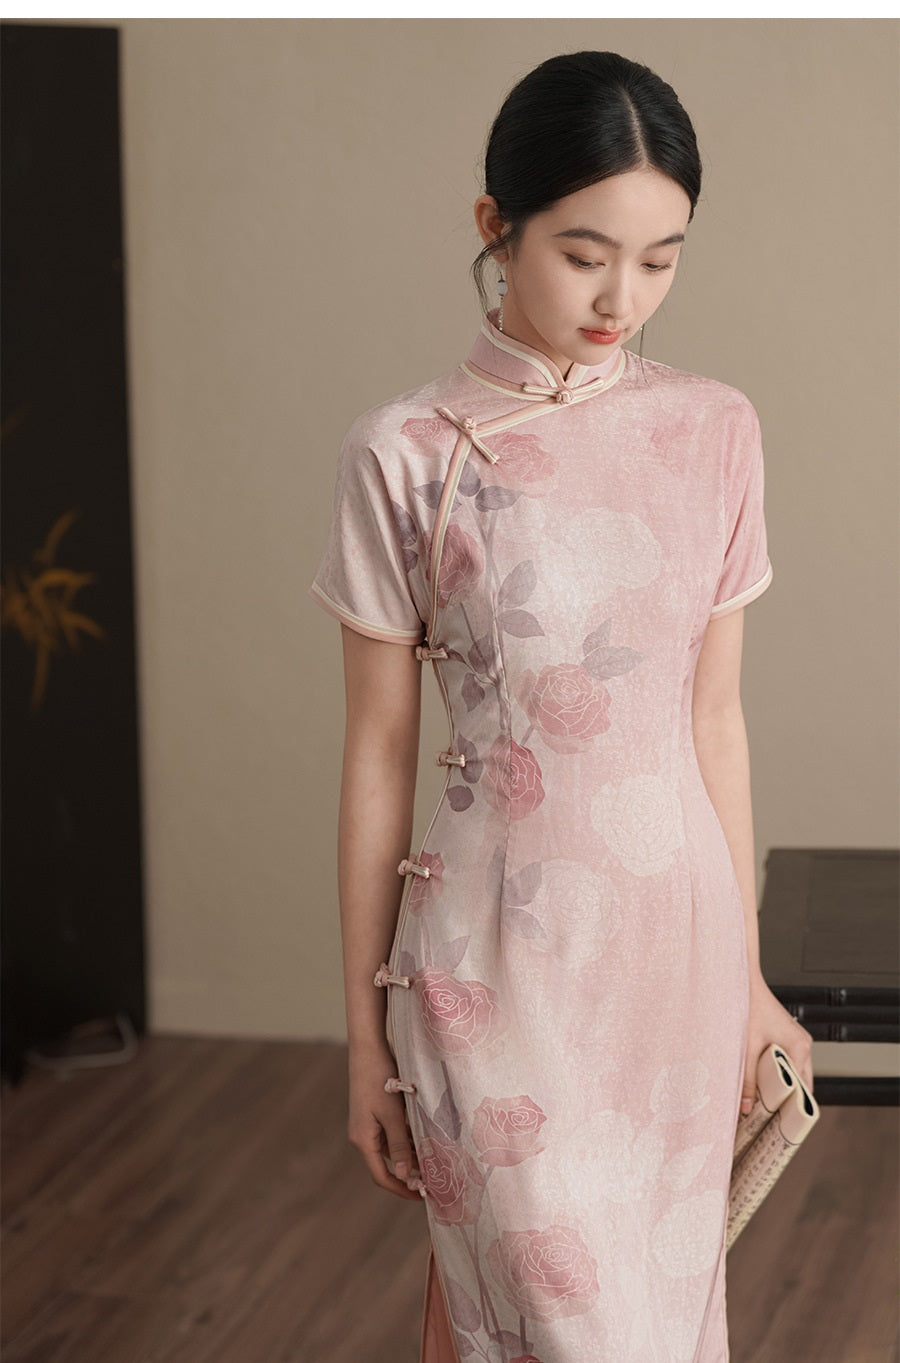 Short  Sleeves pink rose printed qipao cheongsam dress full length model looking down